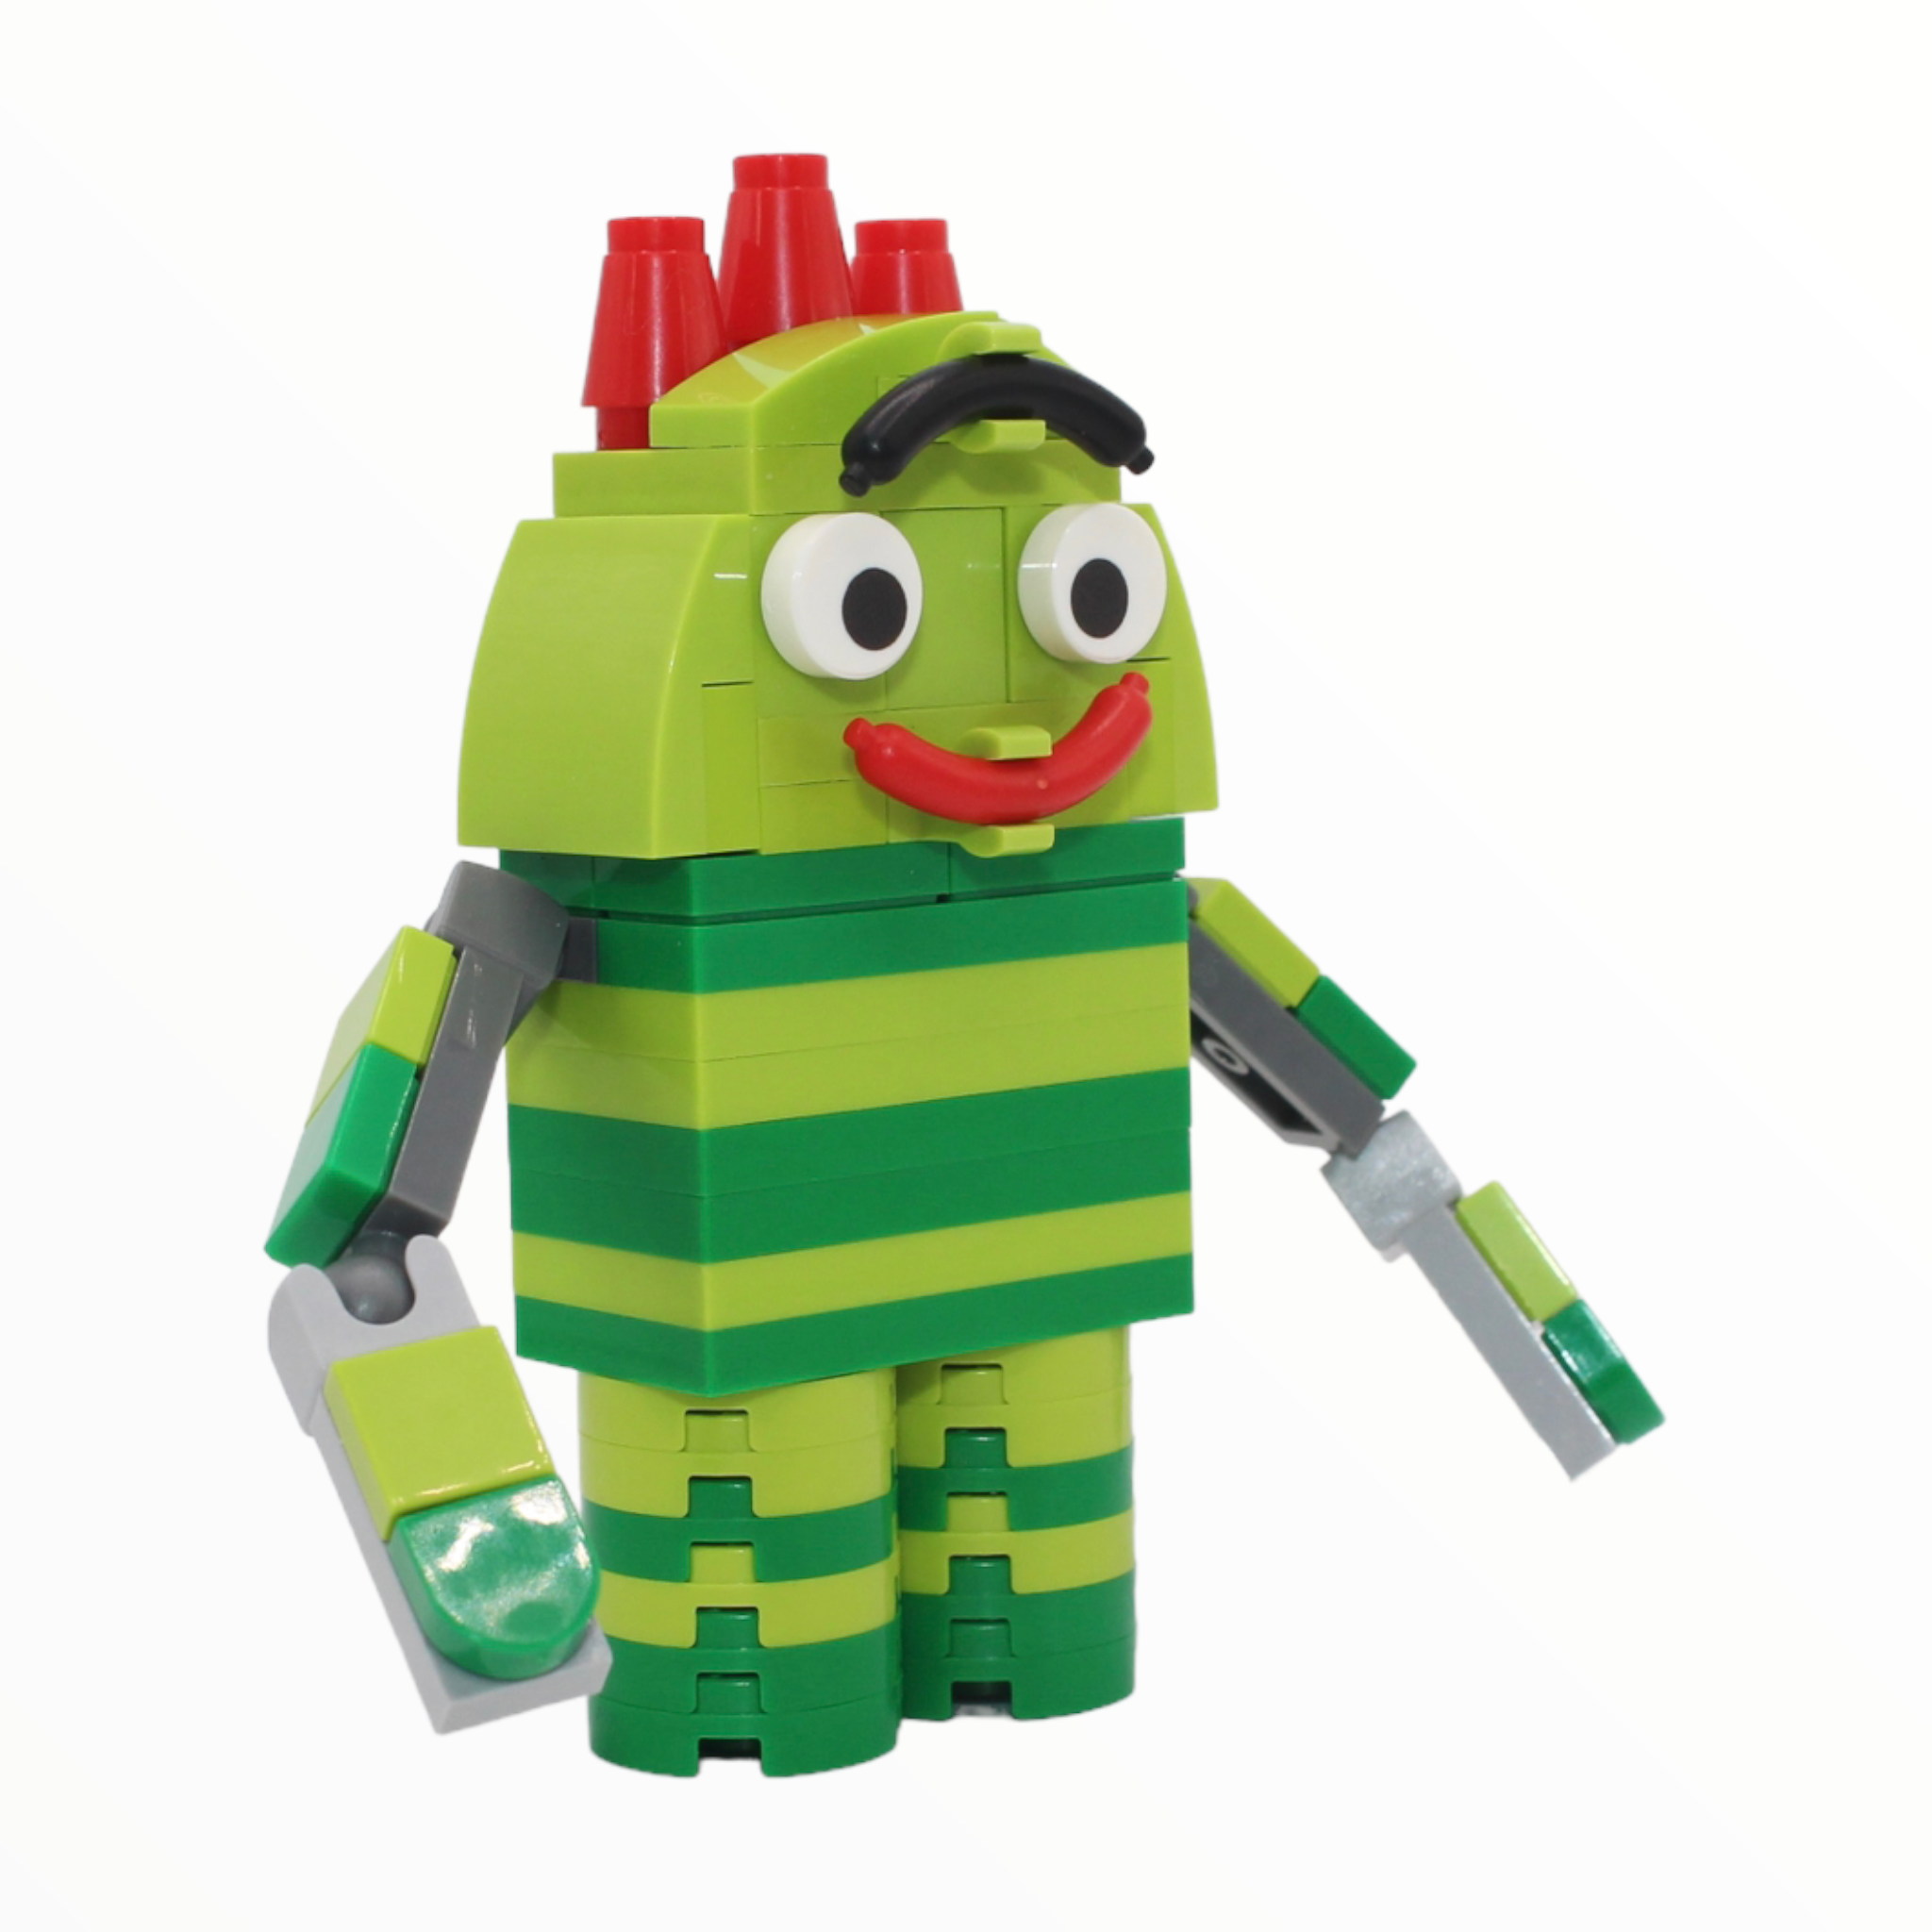 Yo Gabba Gabba - Limited availability of the Brobee Lego Build Kit